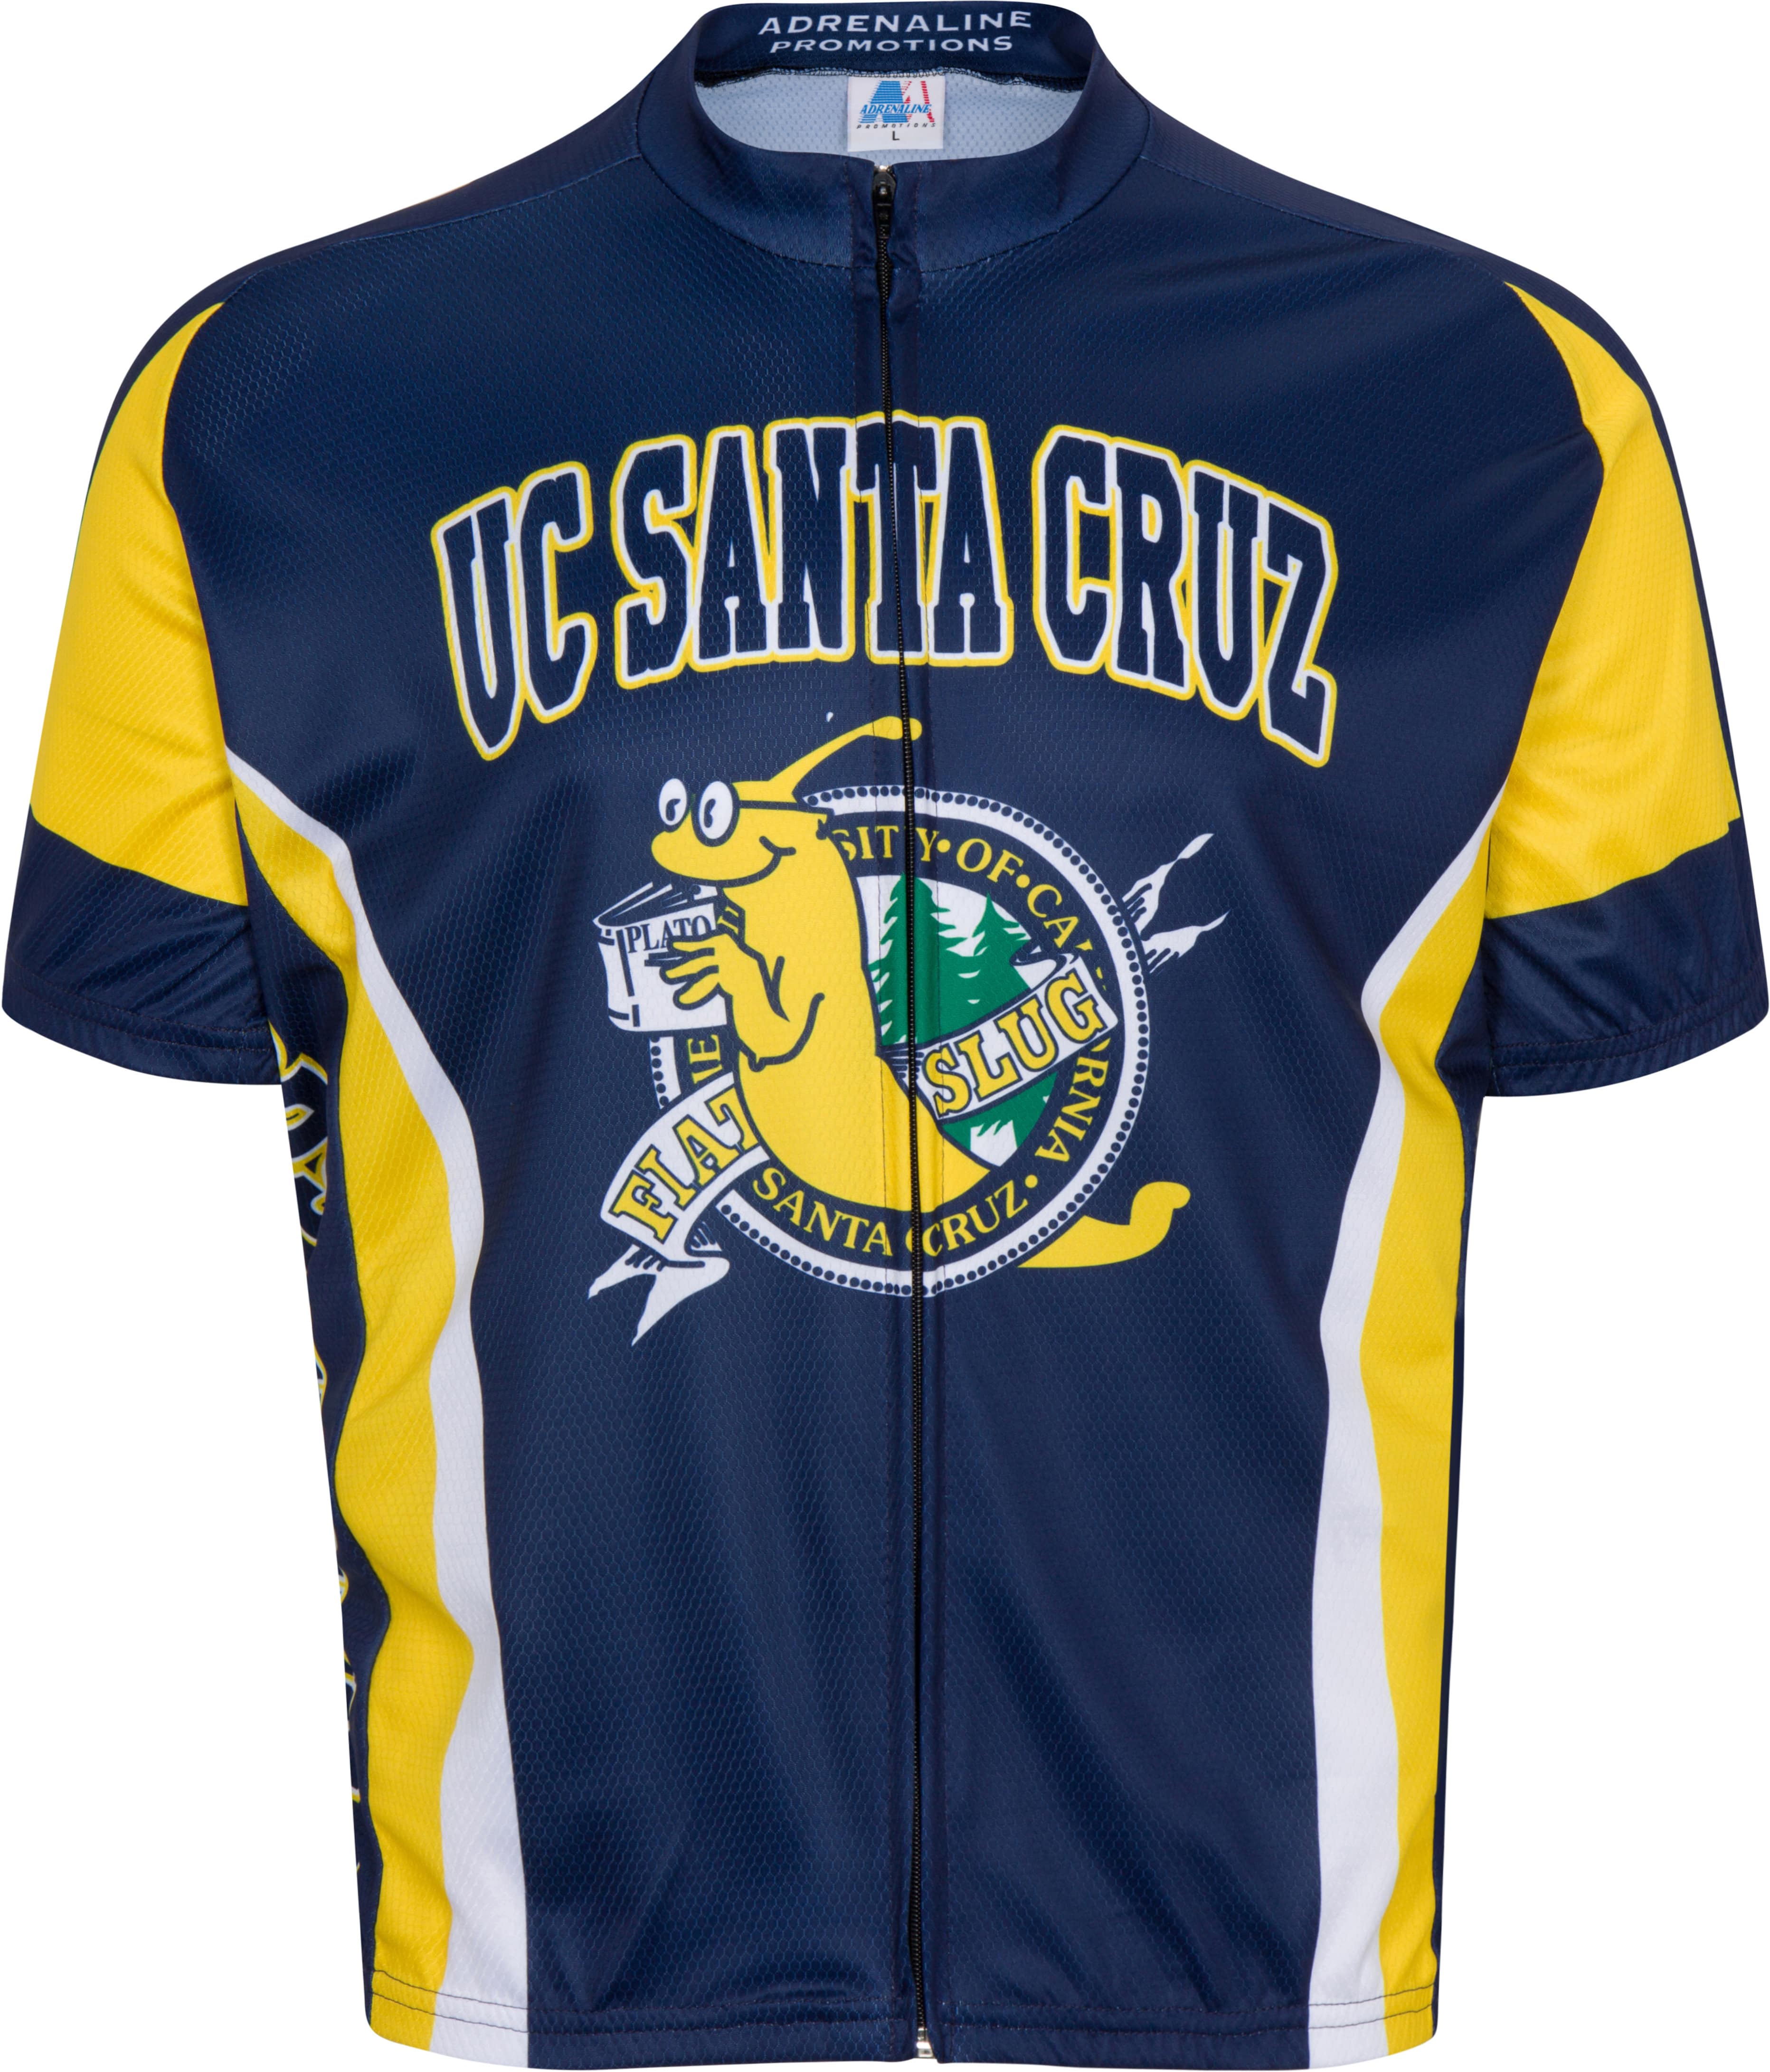 uc santa cruz cycling jersey